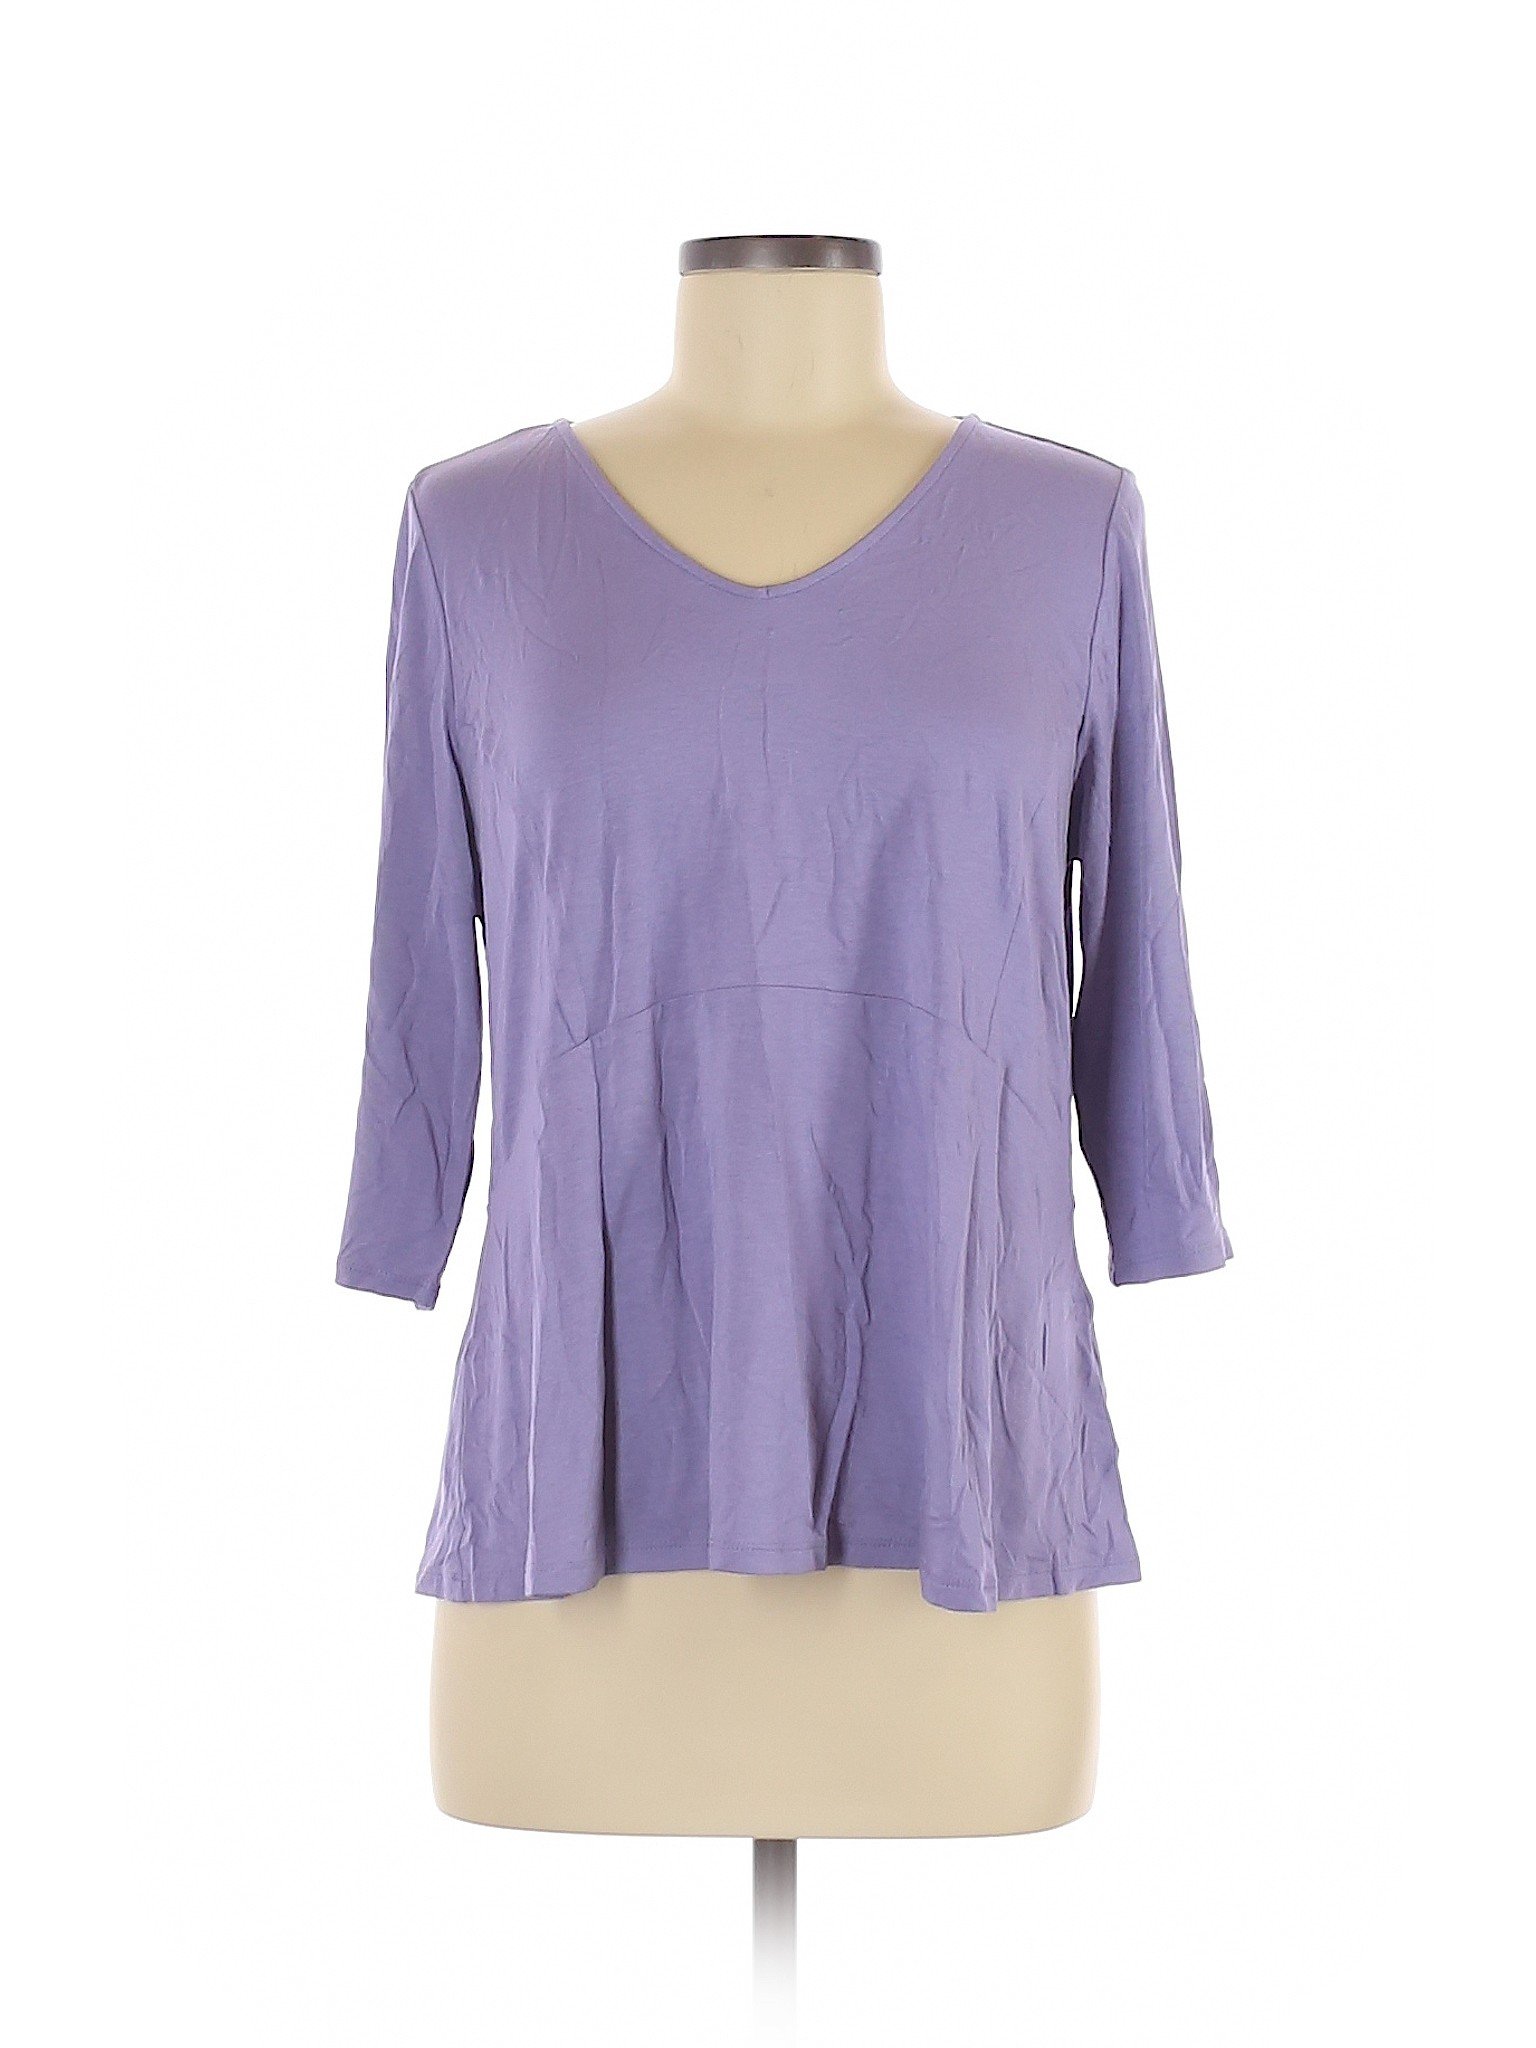 NWT J.jill Women Purple 3/4 Sleeve T-Shirt M Petites | eBay